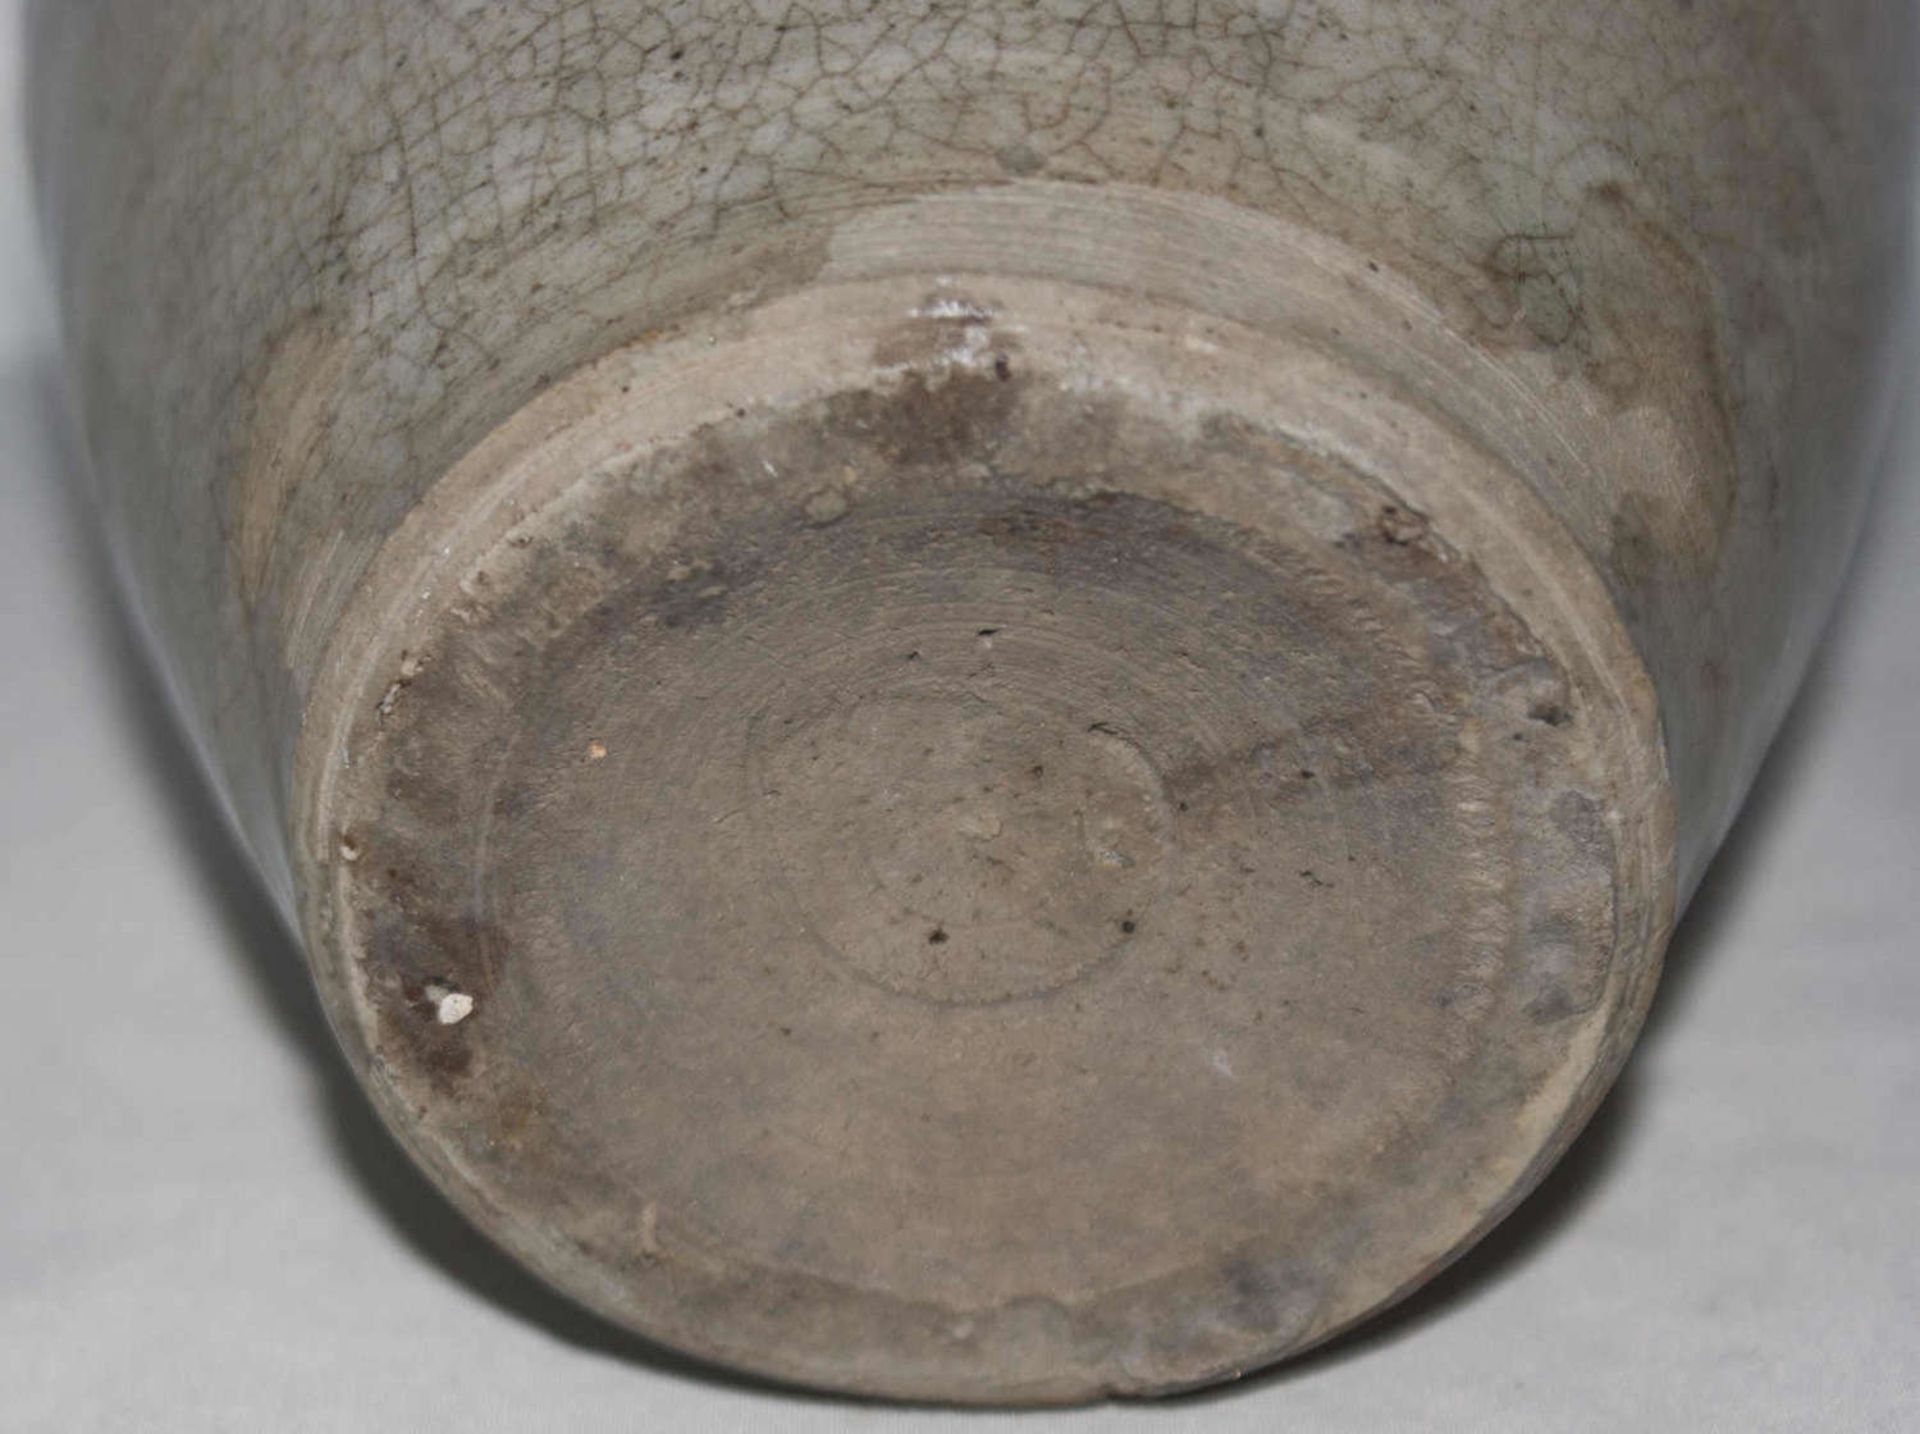 Southern Song Dynastie, 1127-1279. China Stone Vase in sehr guter Erhaltung, aus alter Sammlung. - Image 4 of 4